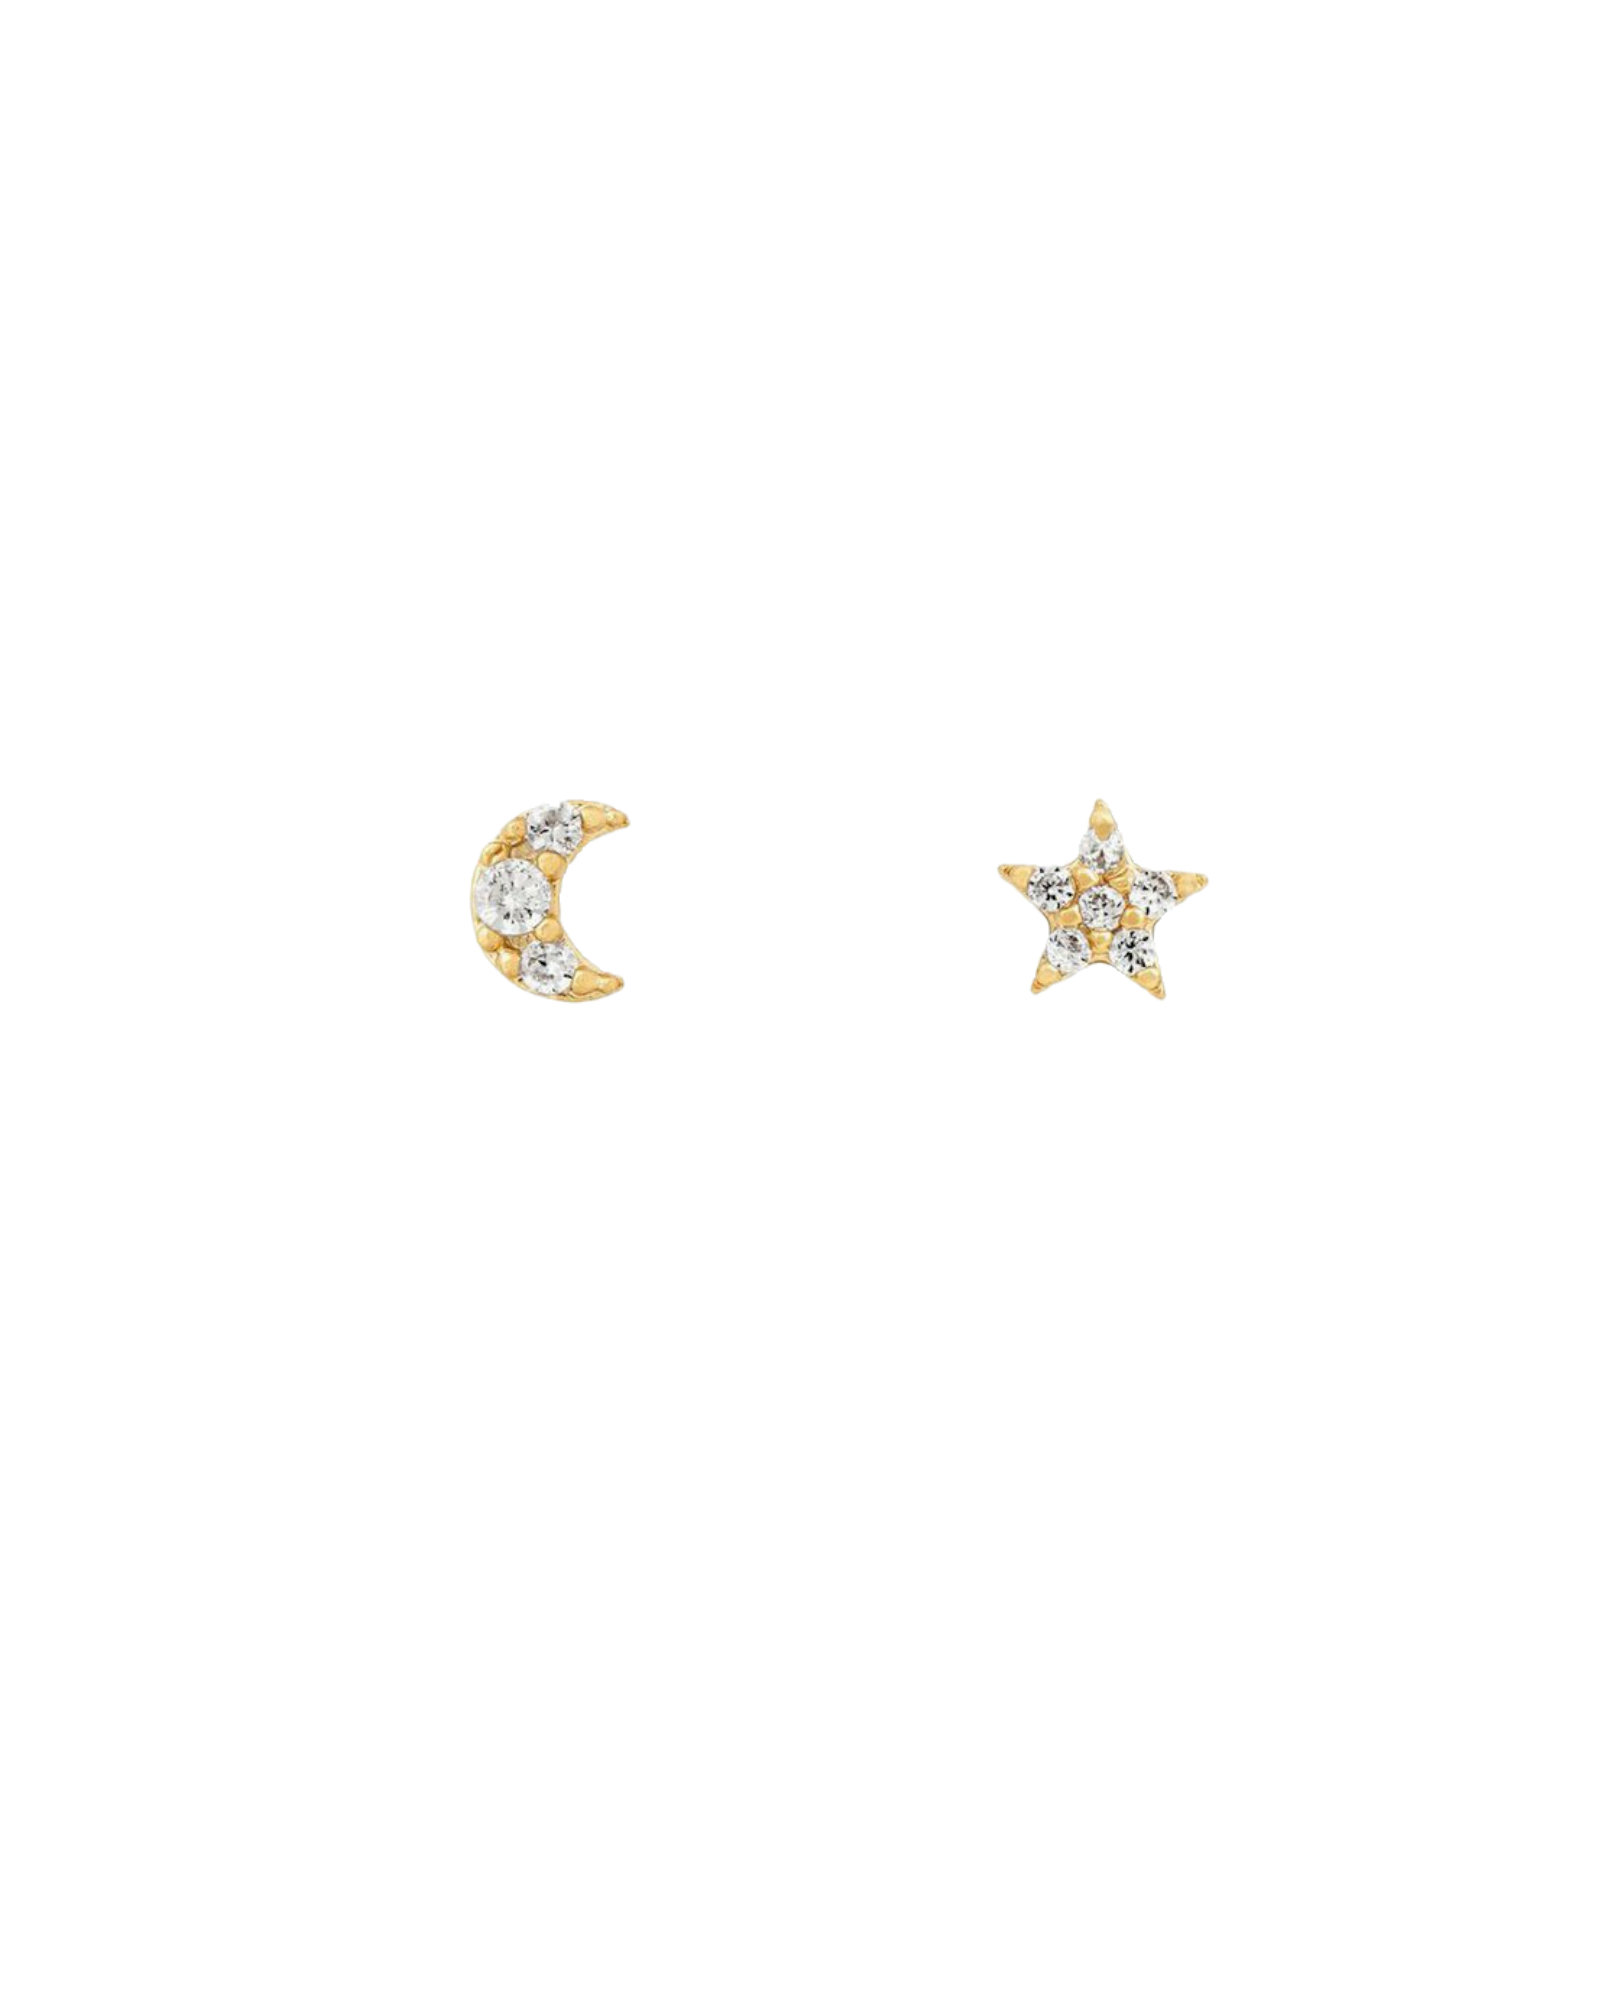 Teeny Tiny Mismatch Moon And Star Stud Earrings SHE0838